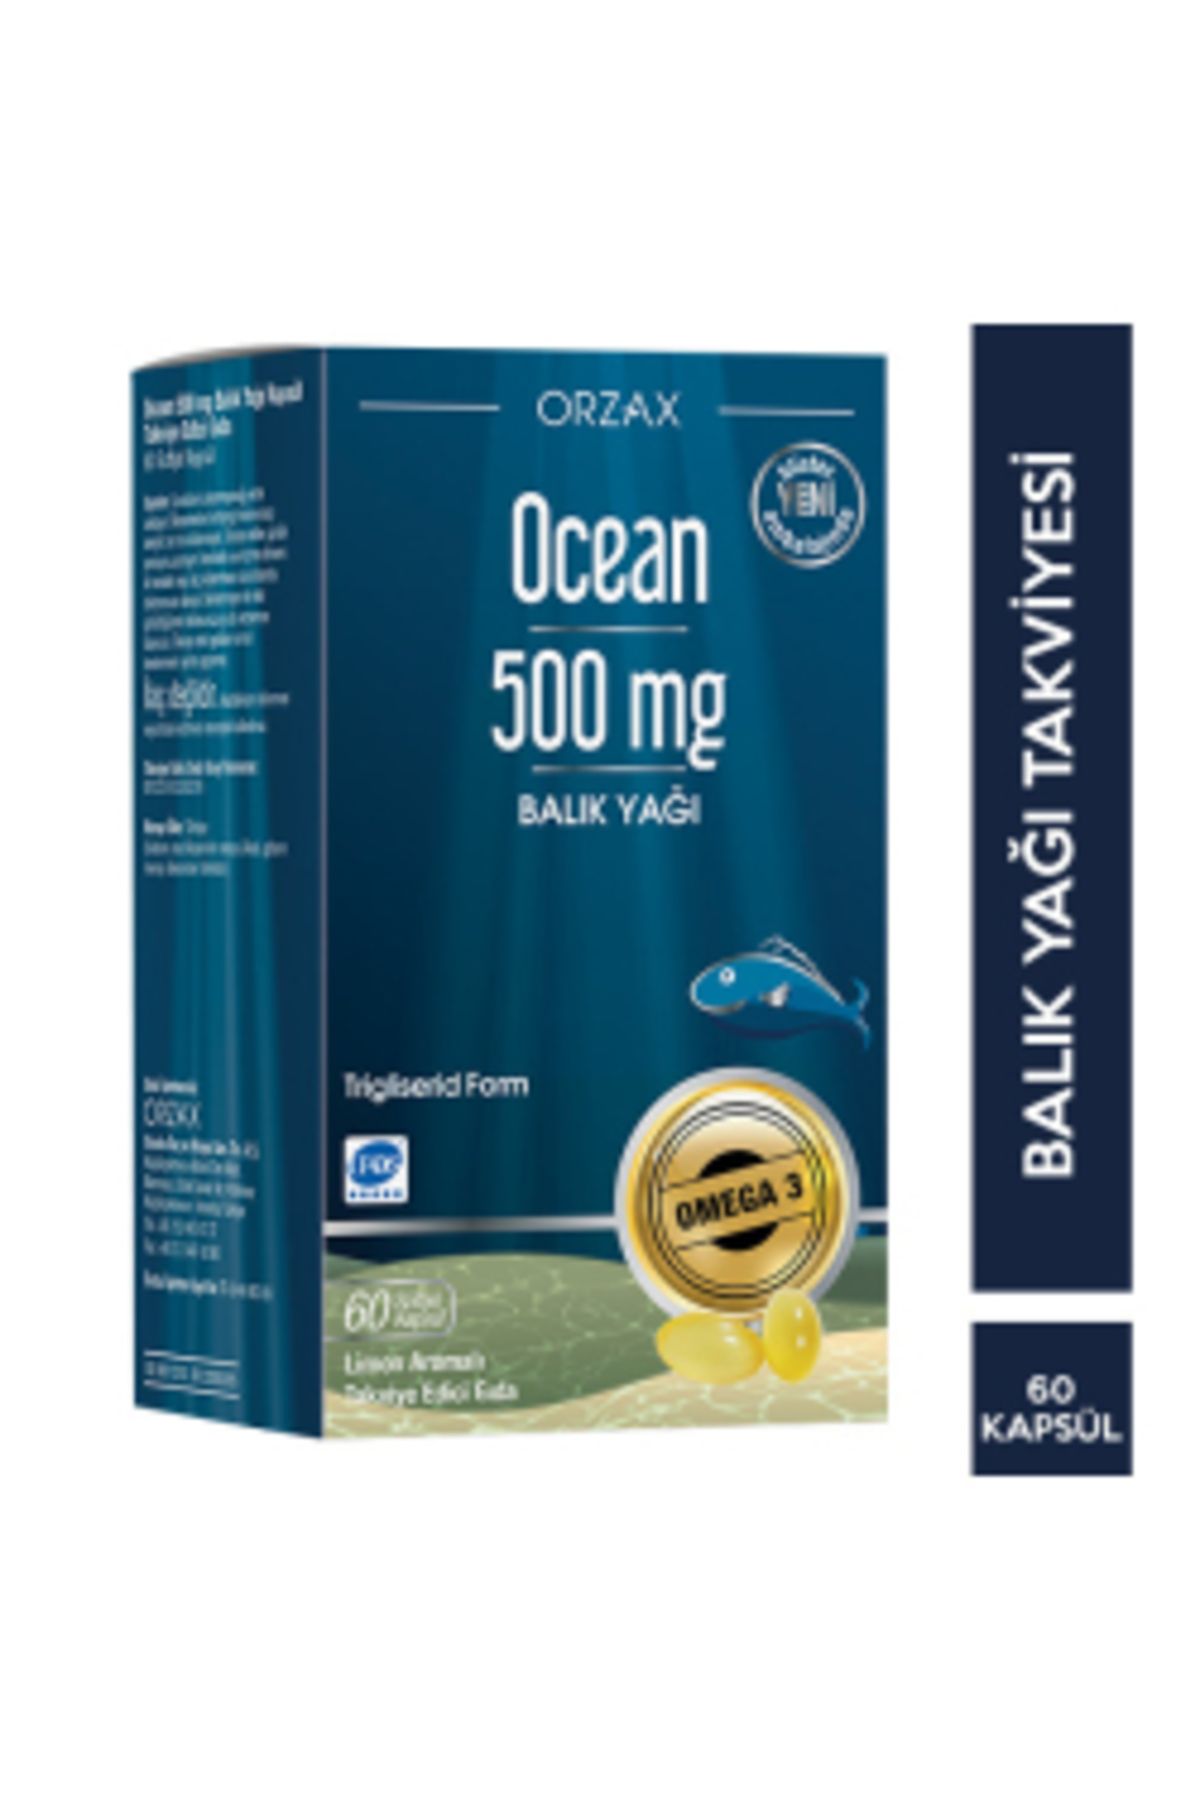 Orzax Ocean Omega 3 500 Mg Saf Balık Yağı 60 Kapsül ( 1 ADET )